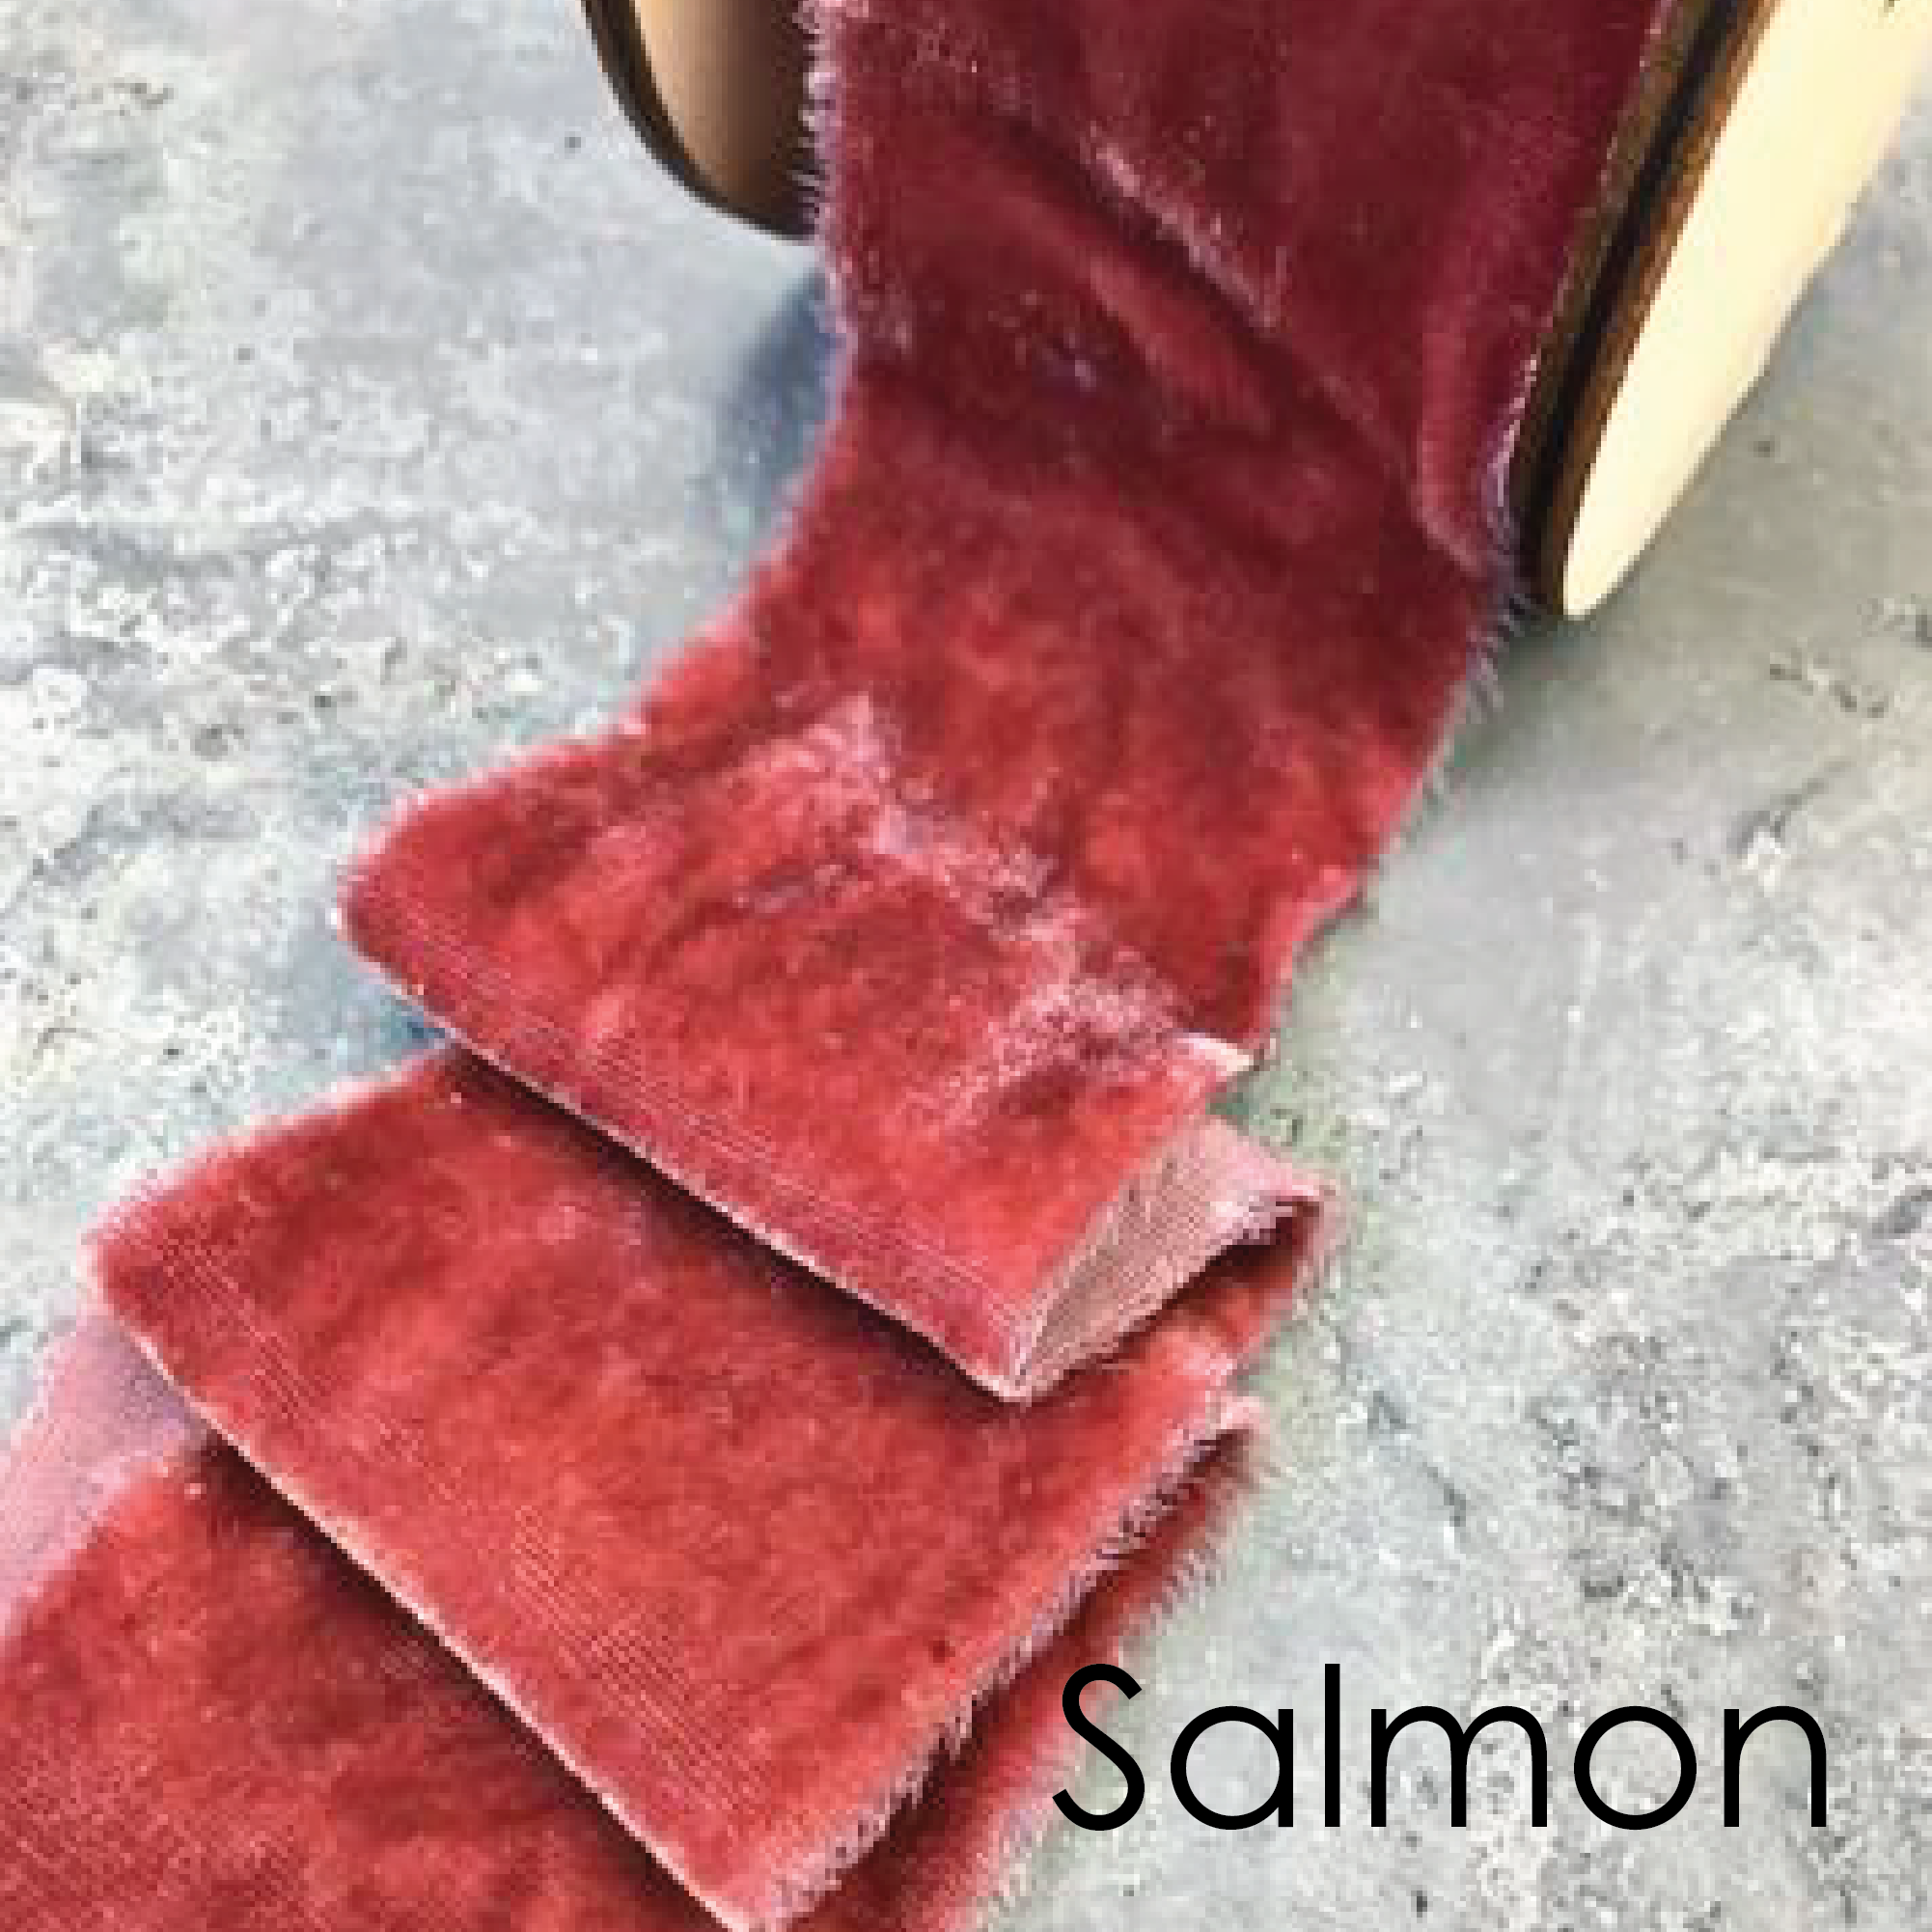 Salmon-01.png